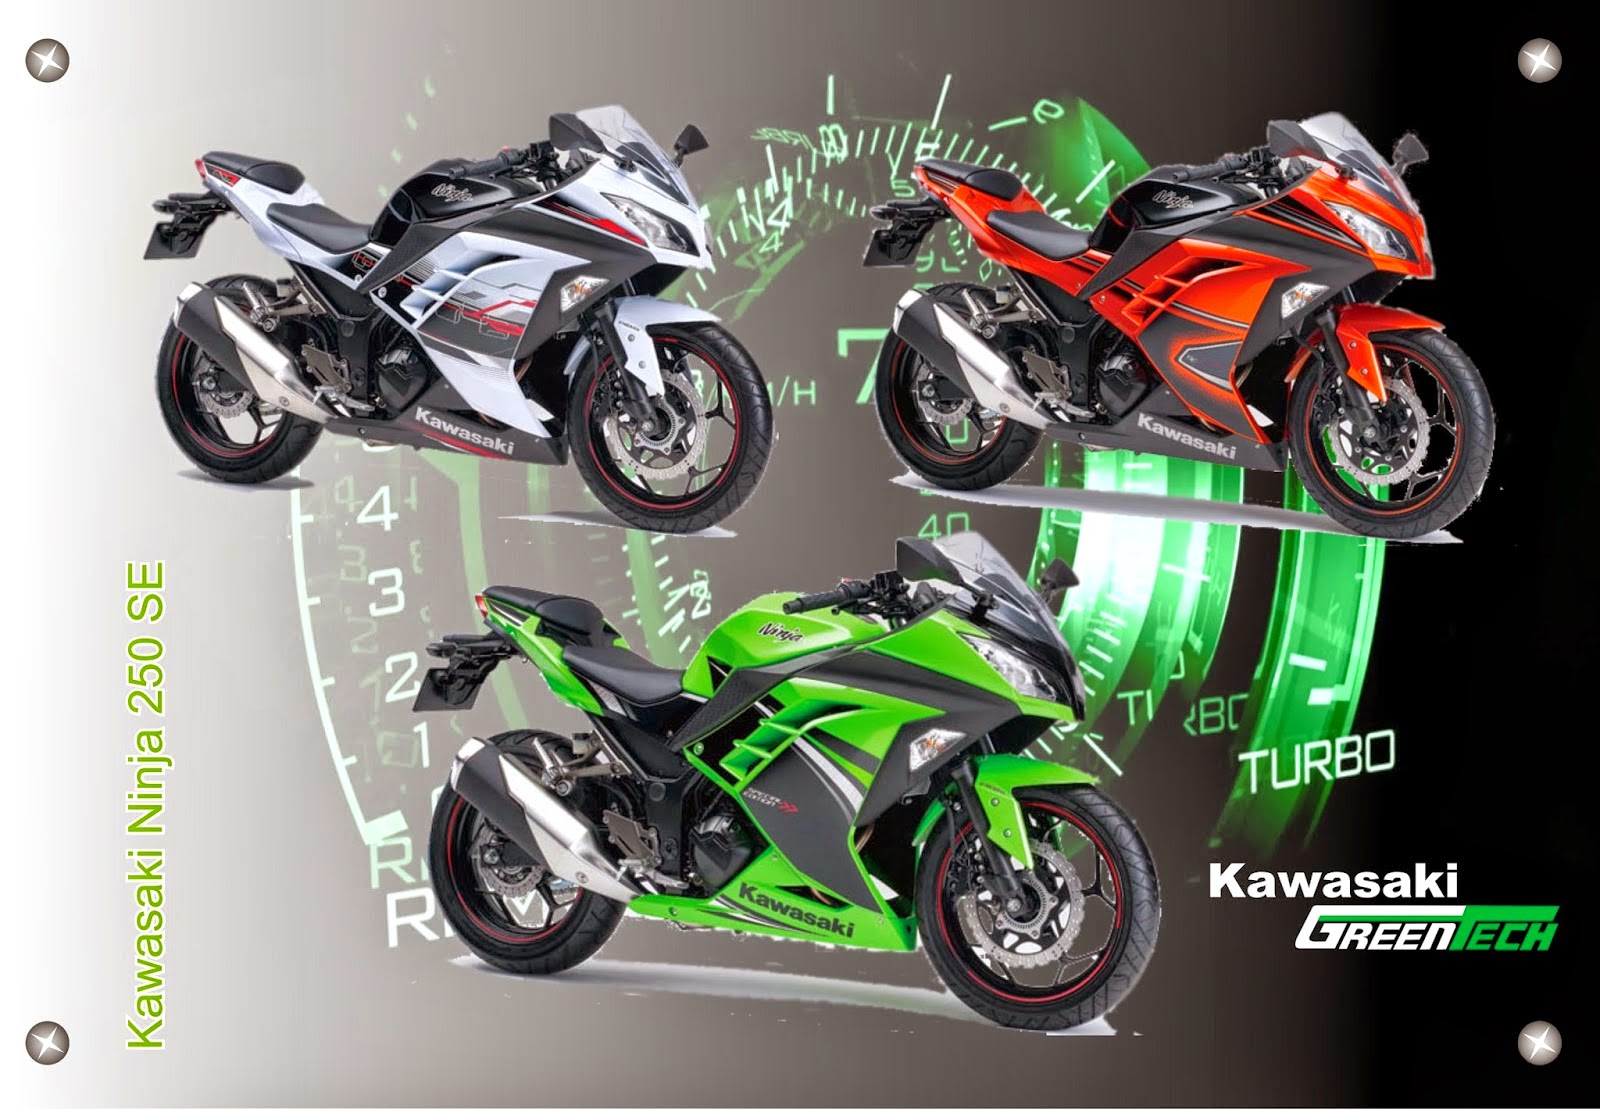  Kawasaki  Ninja  Z250  Modifikasi Thecitycyclist